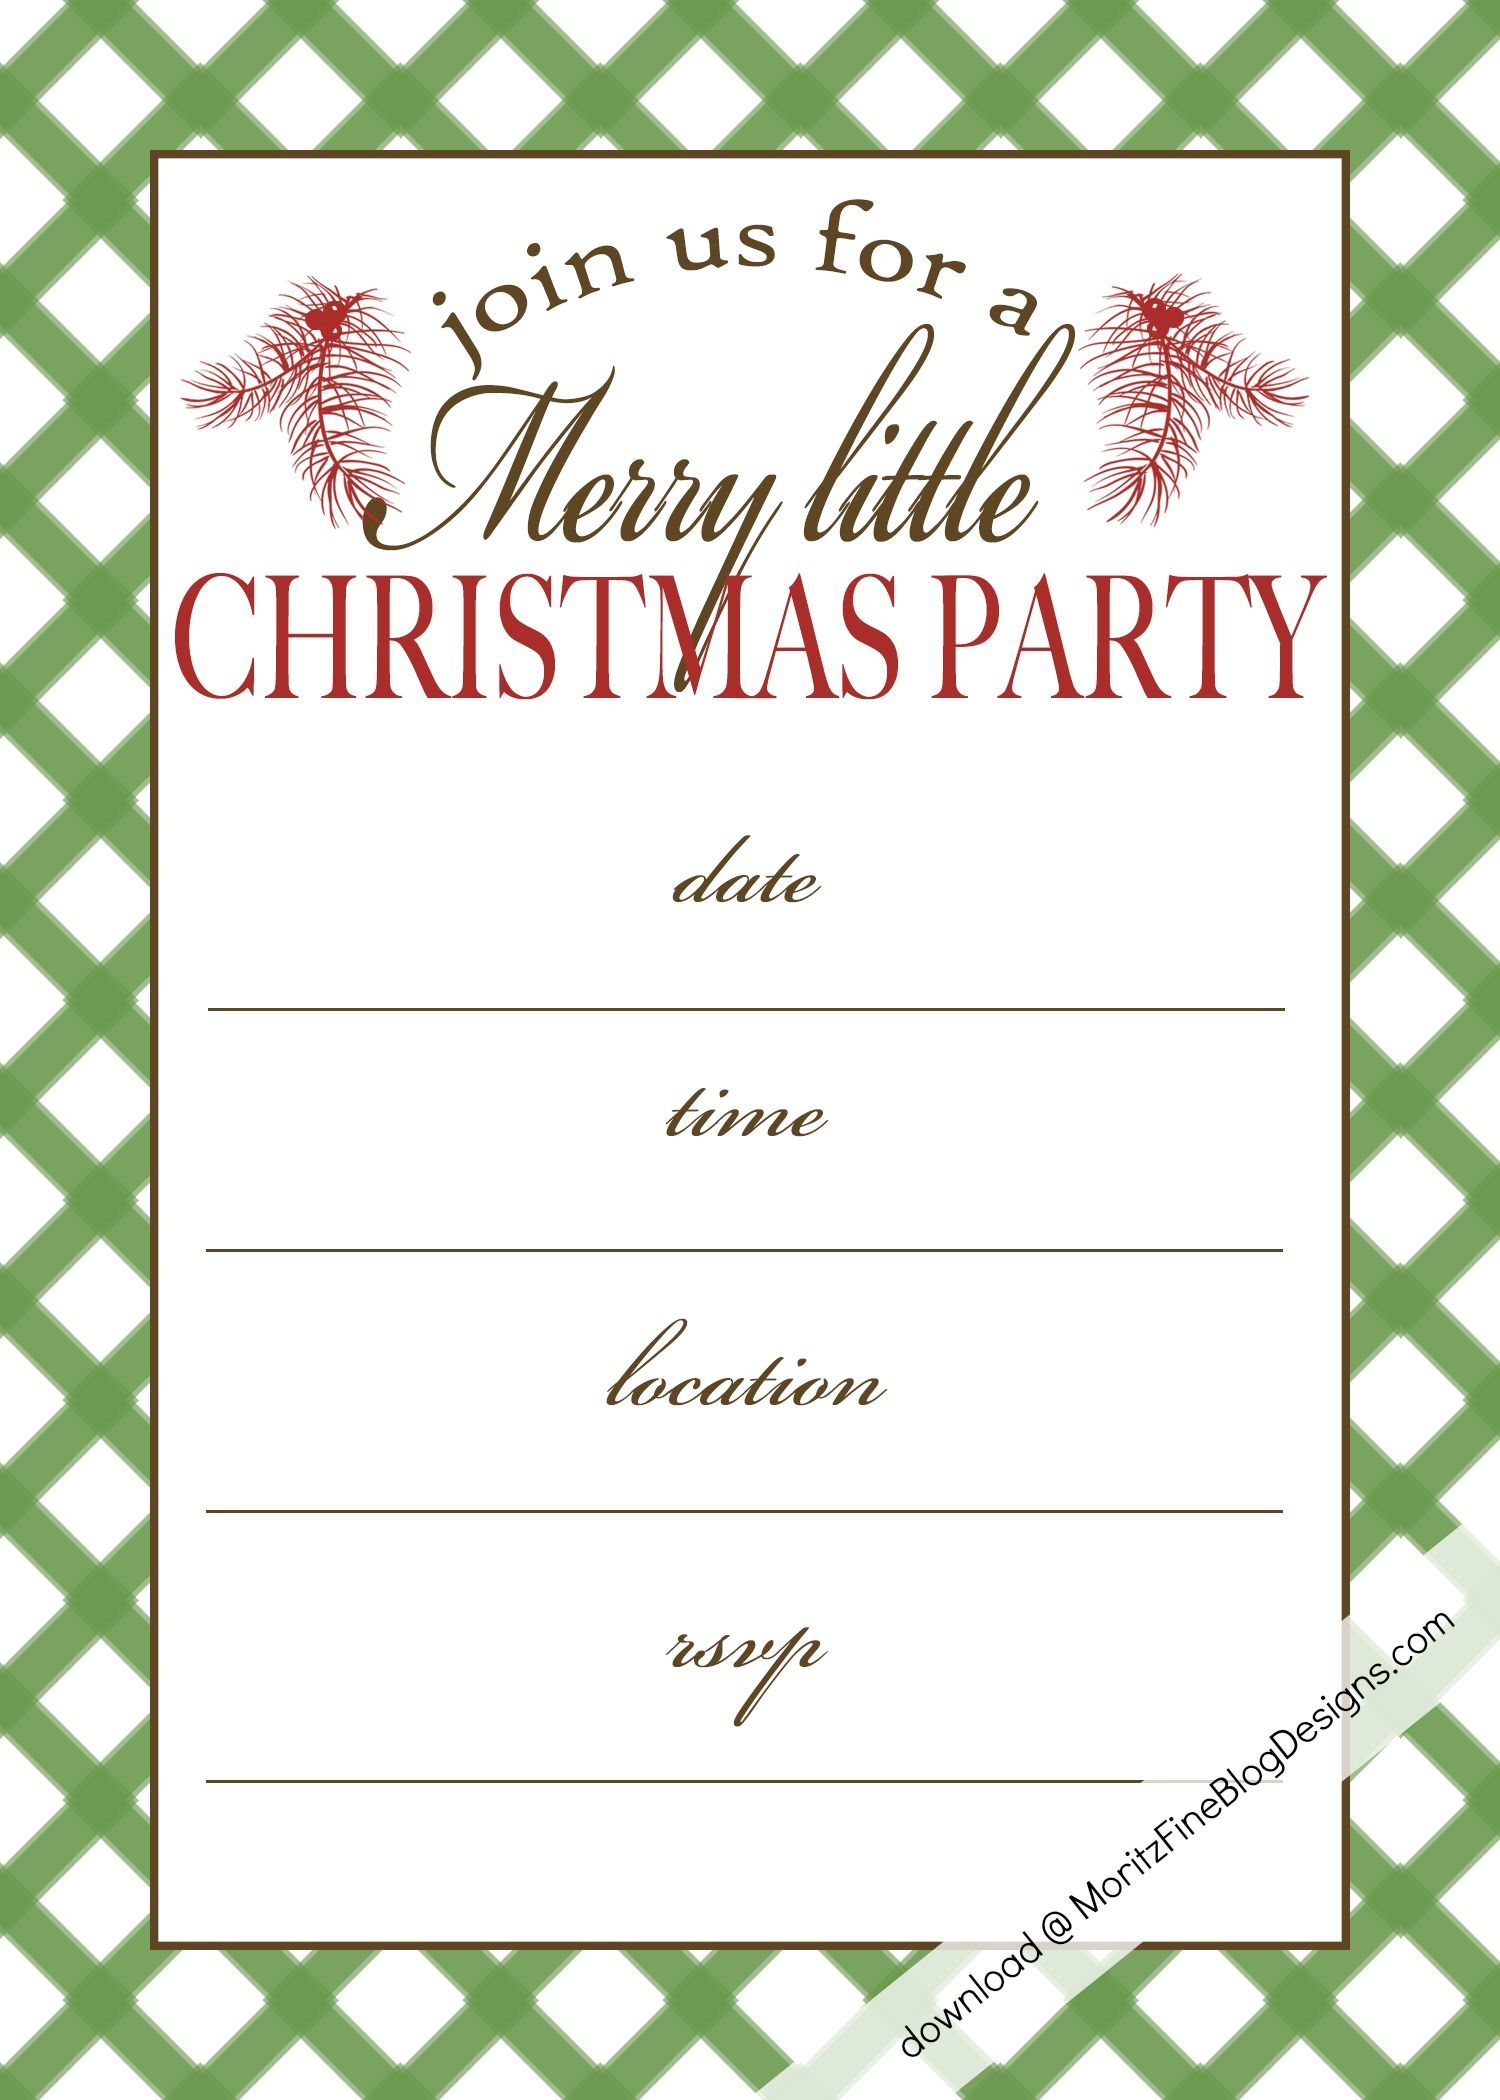 Free Printable Christmas Party Invitation | Christmas:print - Christmas Party Invitation Templates Free Printable